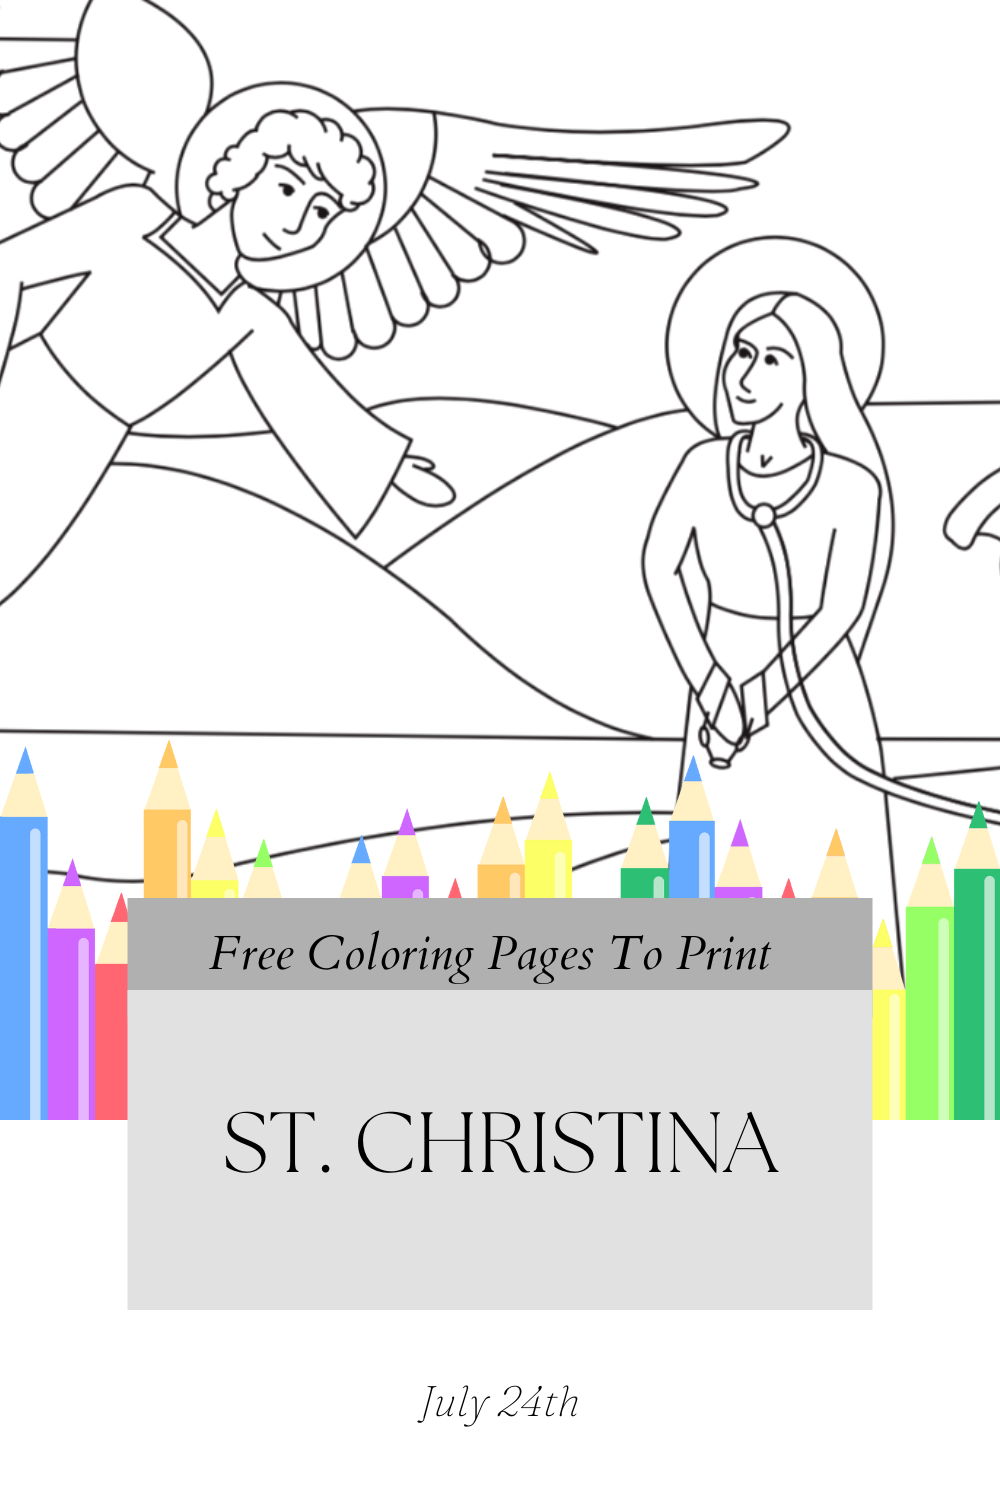 St. Christina Coloring Page Blog Image